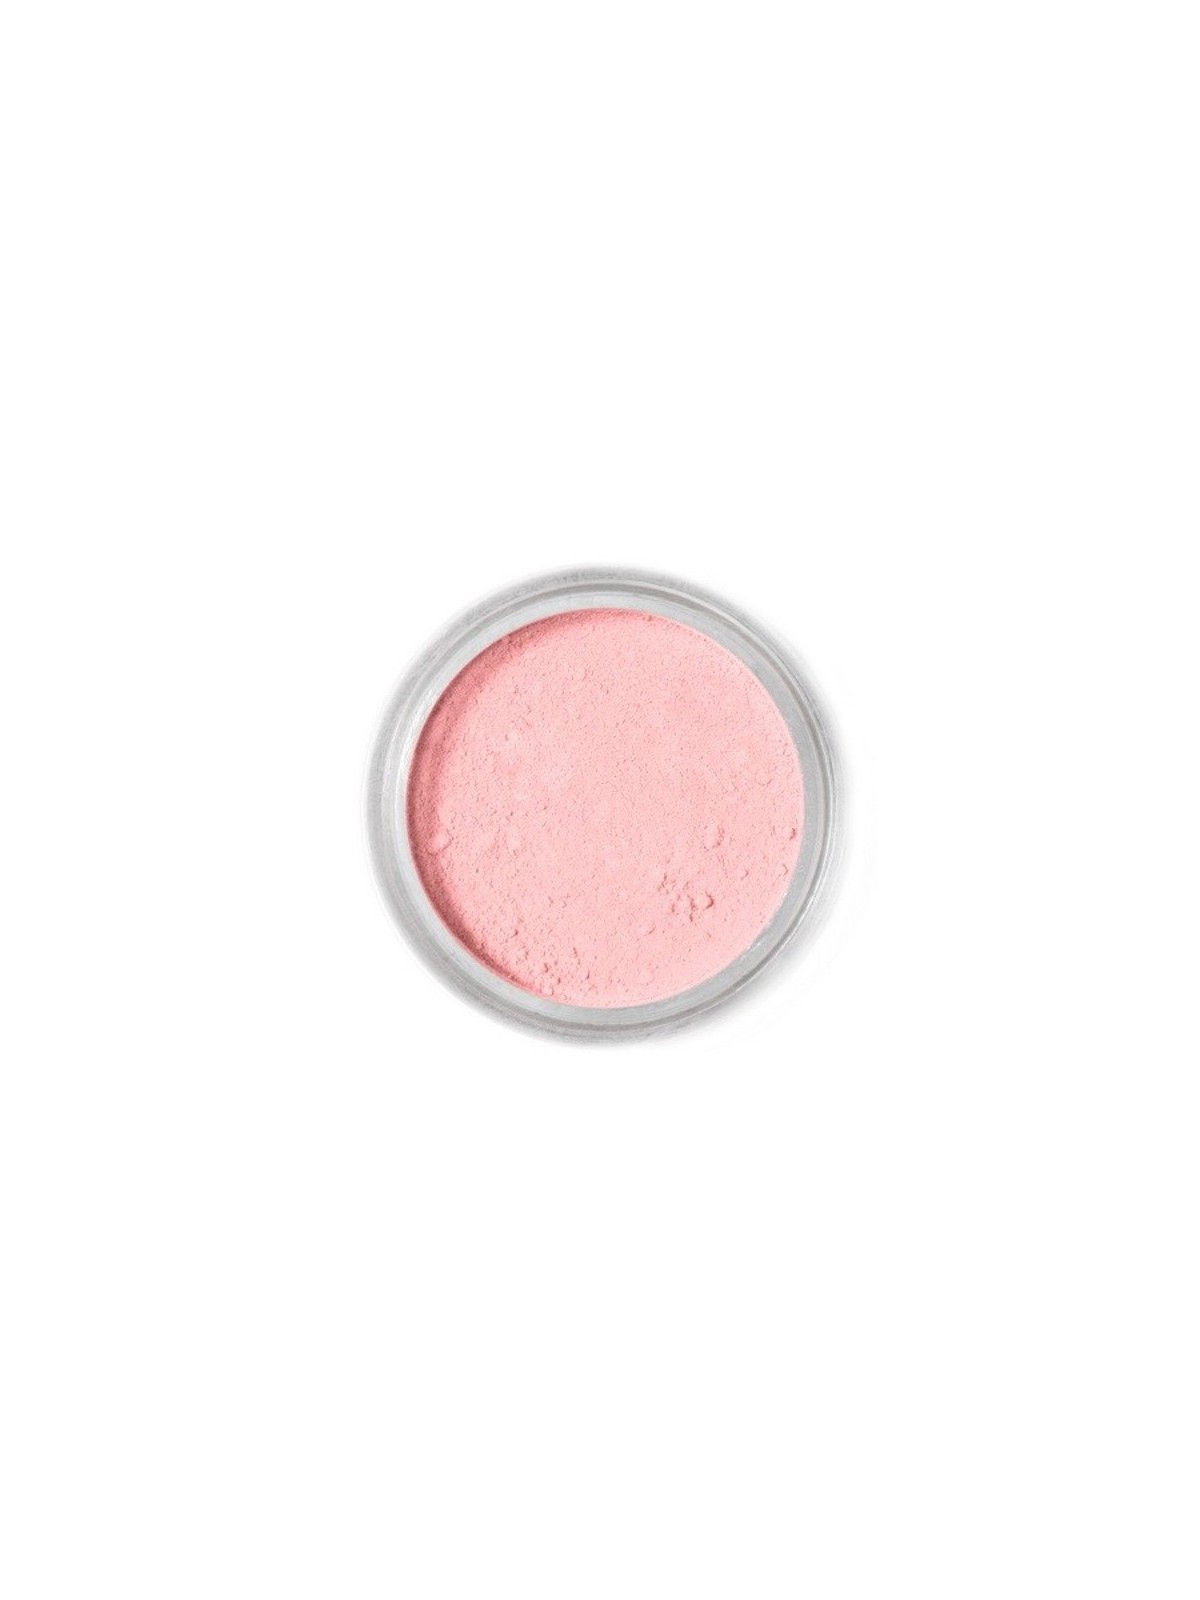 Dekorativní prachová barva Fractal - Pastel Pink (4 g)